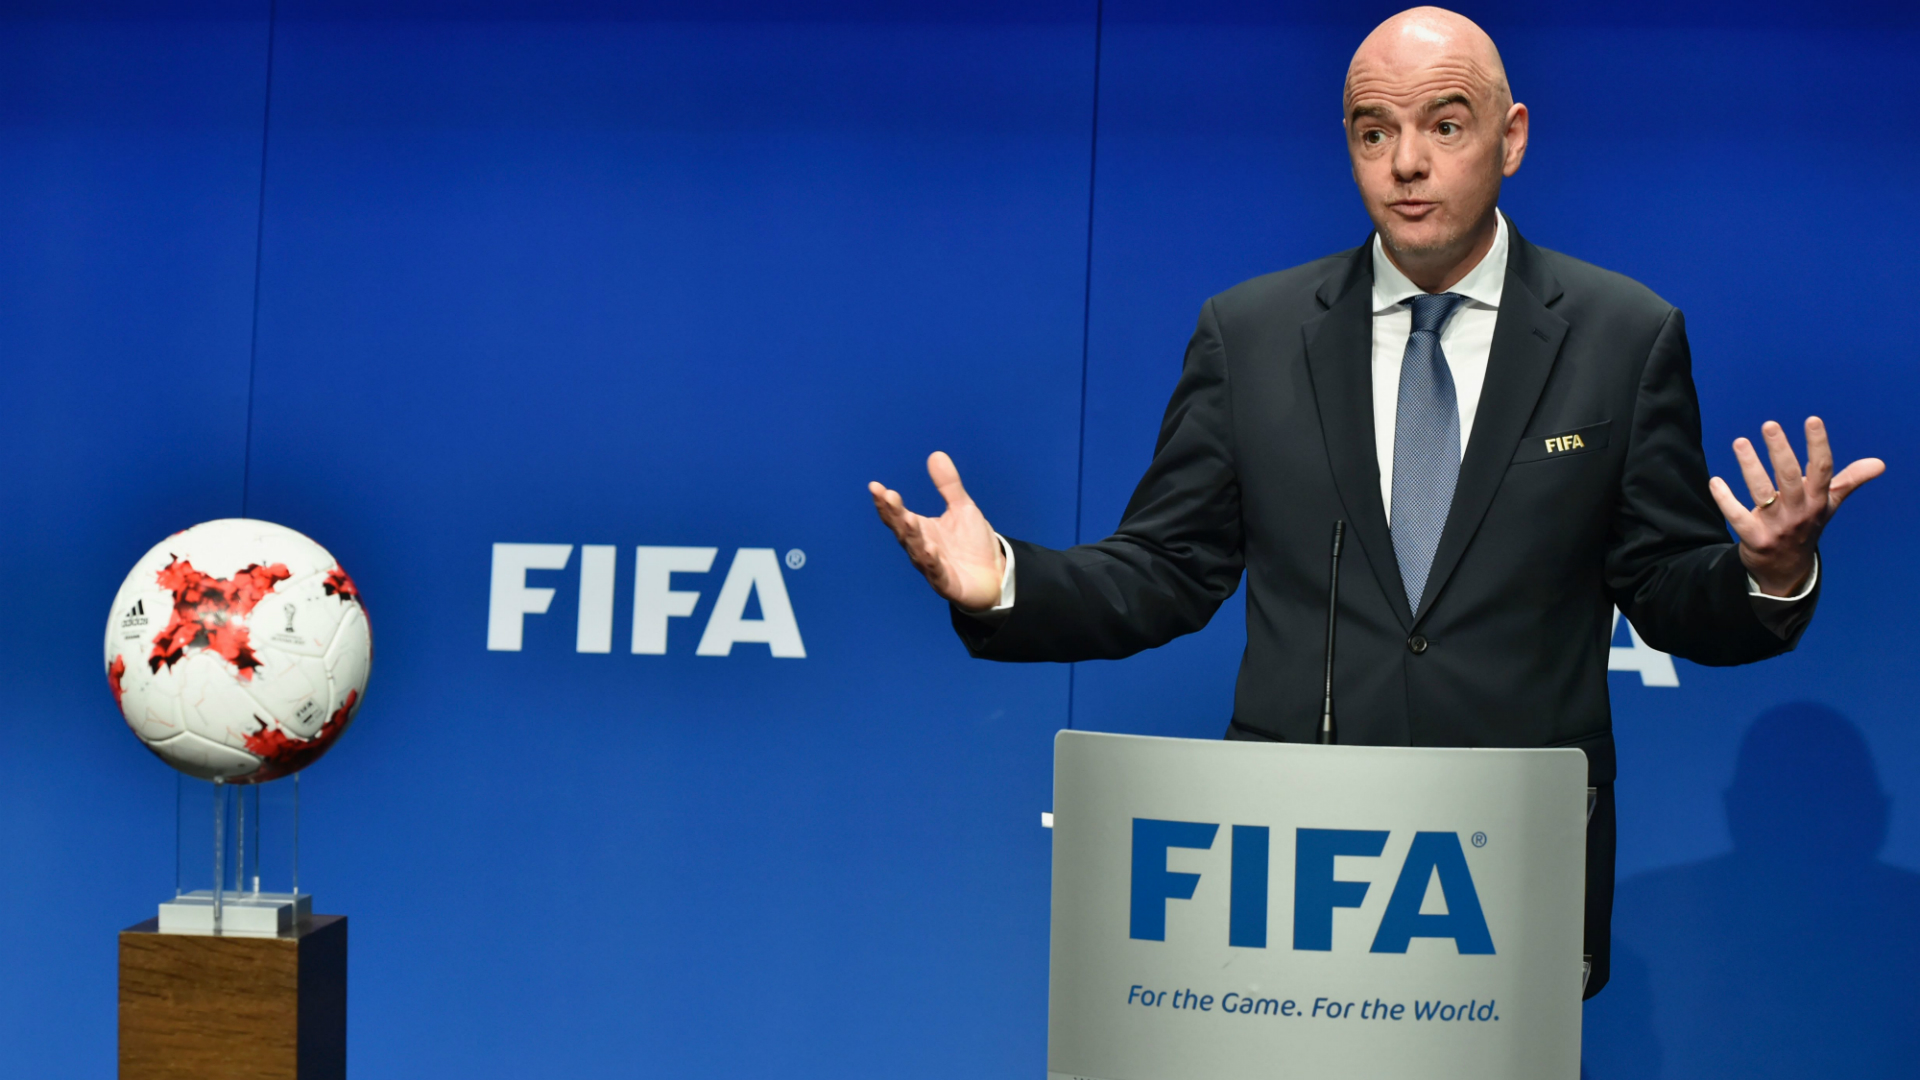 Fifaがローン移籍減少に向けて動き 来季から国際移籍で新ルール適応へ Goal Com